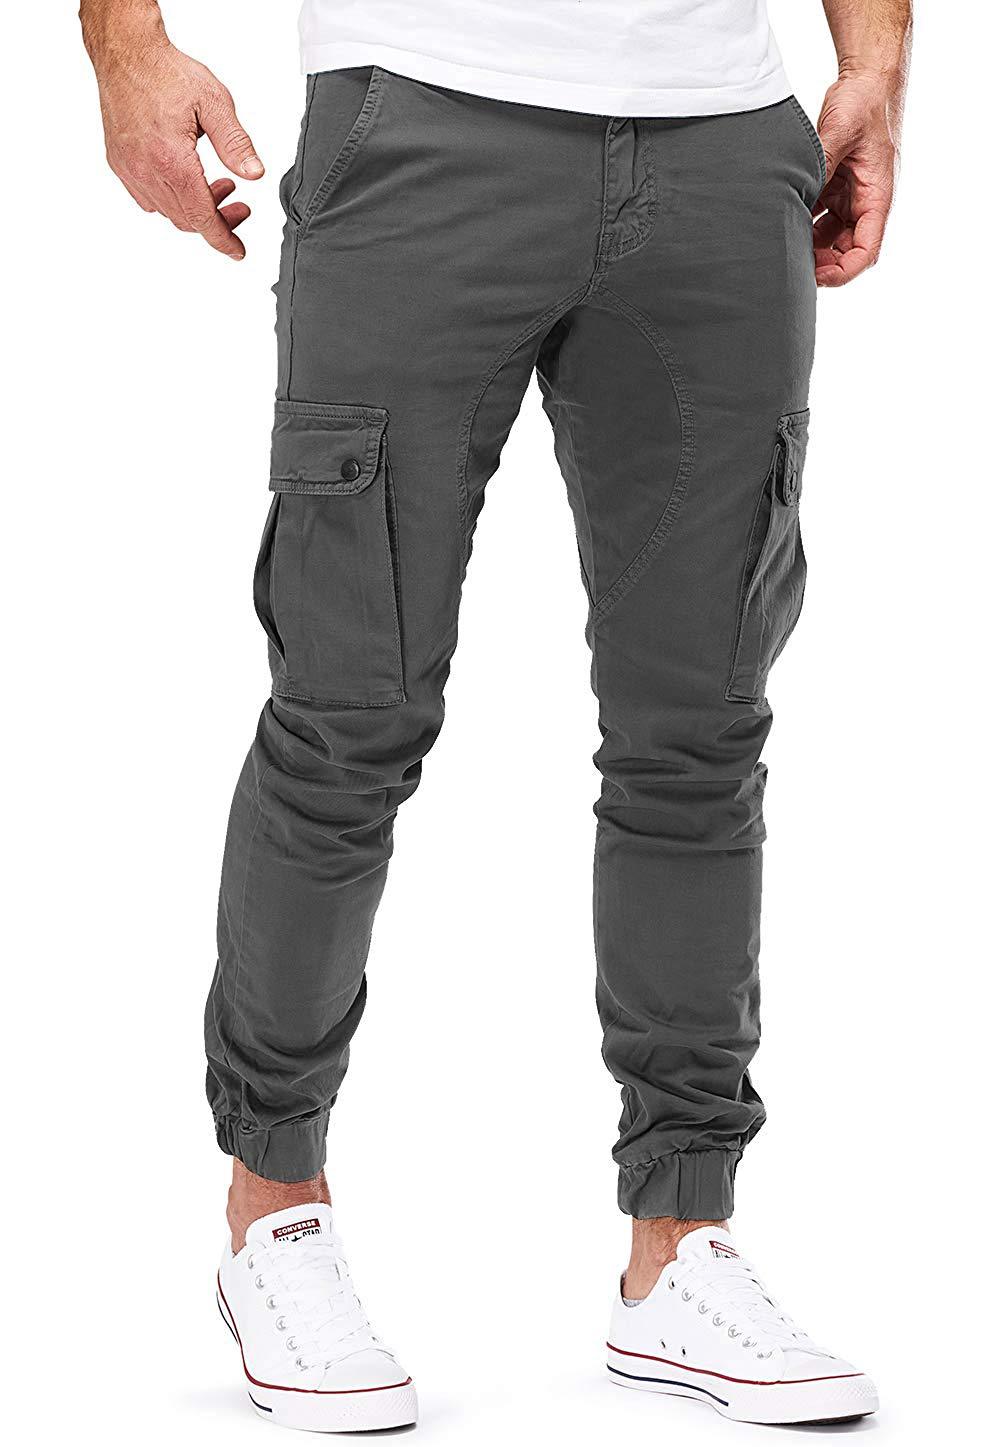 Casual Men Pocket Long Pants-Men Pants-Dark Gray-M-Free Shipping at meselling99